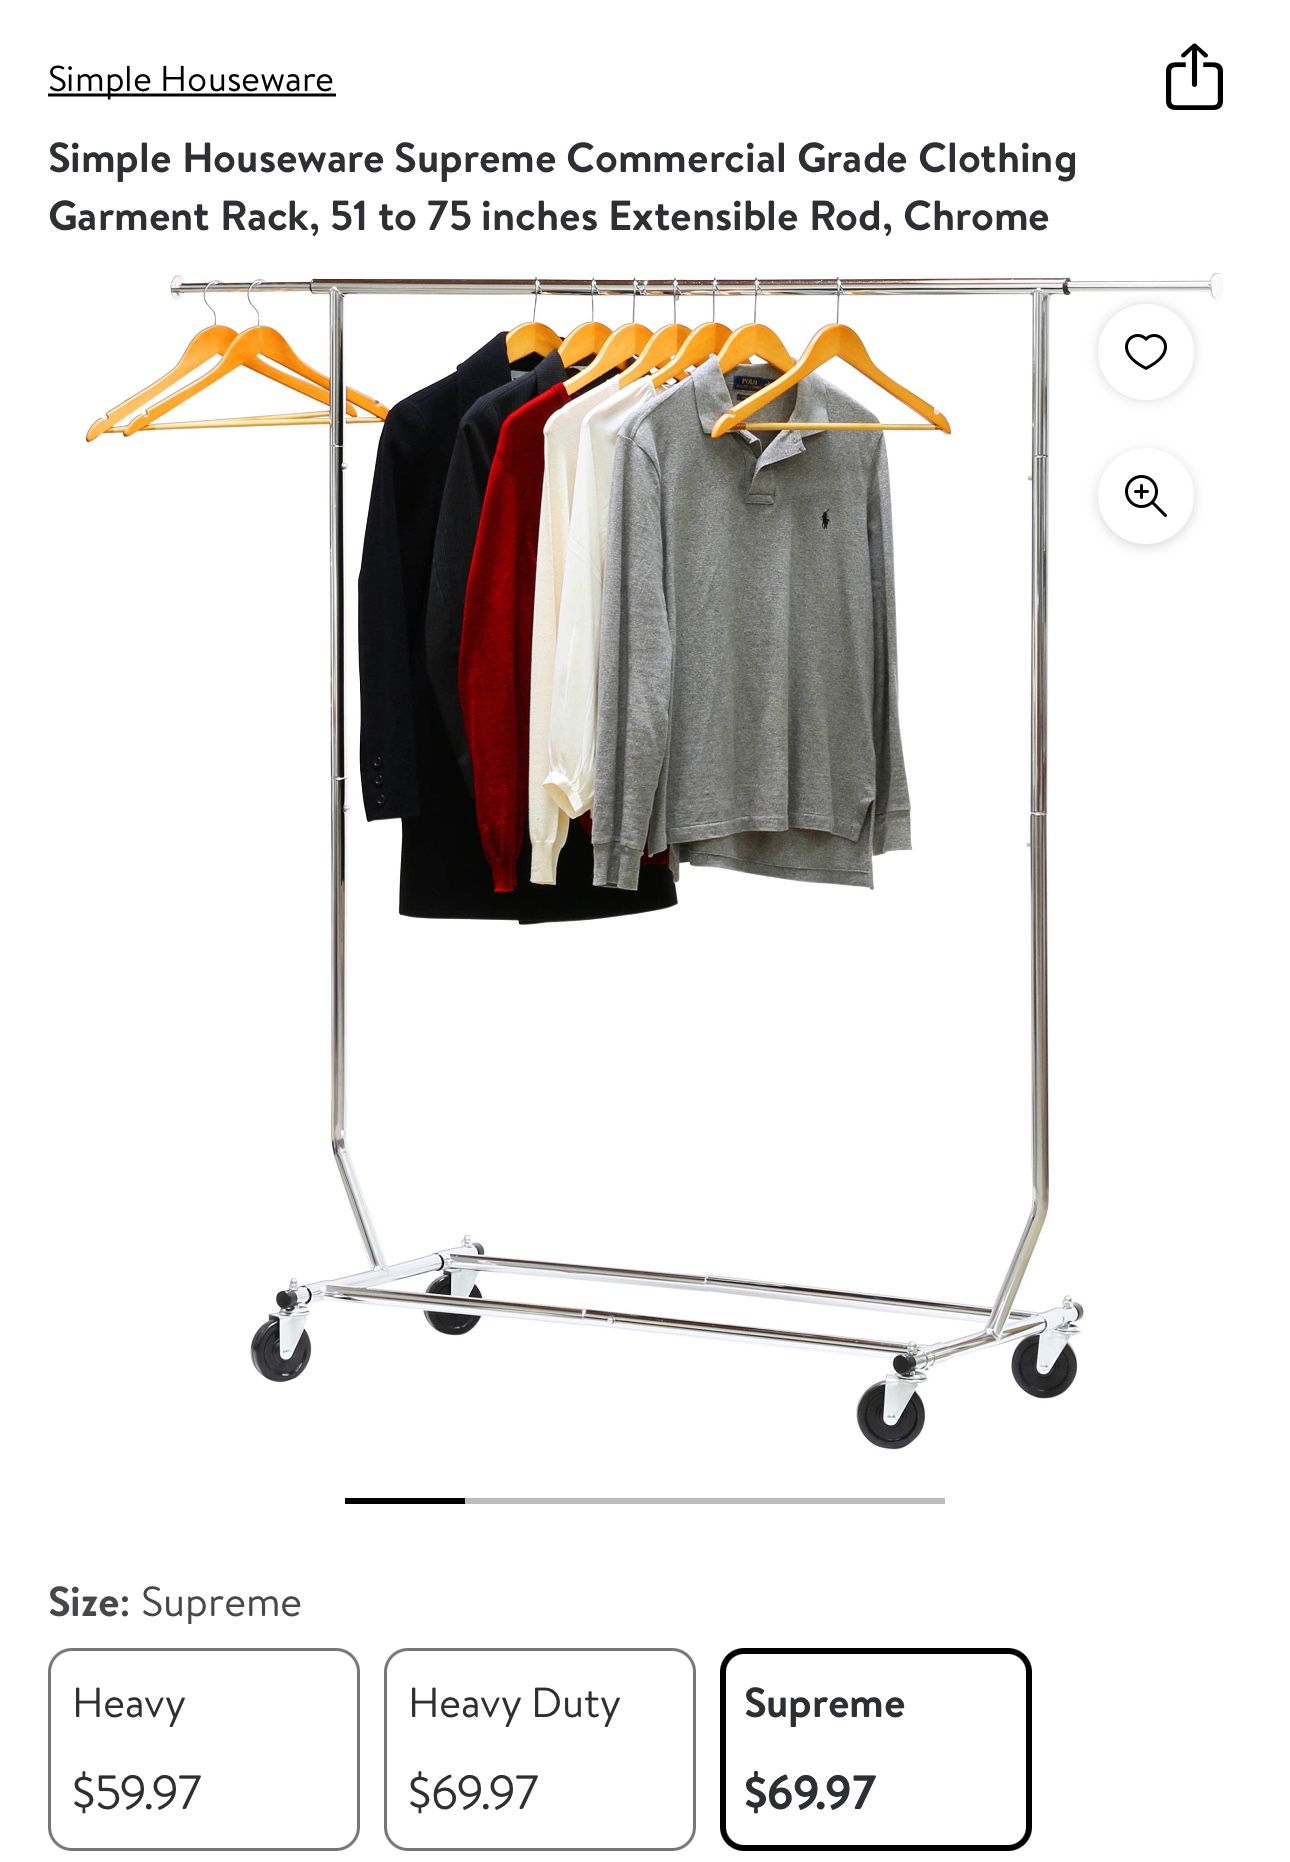 (2) Commercial Grade Heavy Duty Clothing Garment Racks